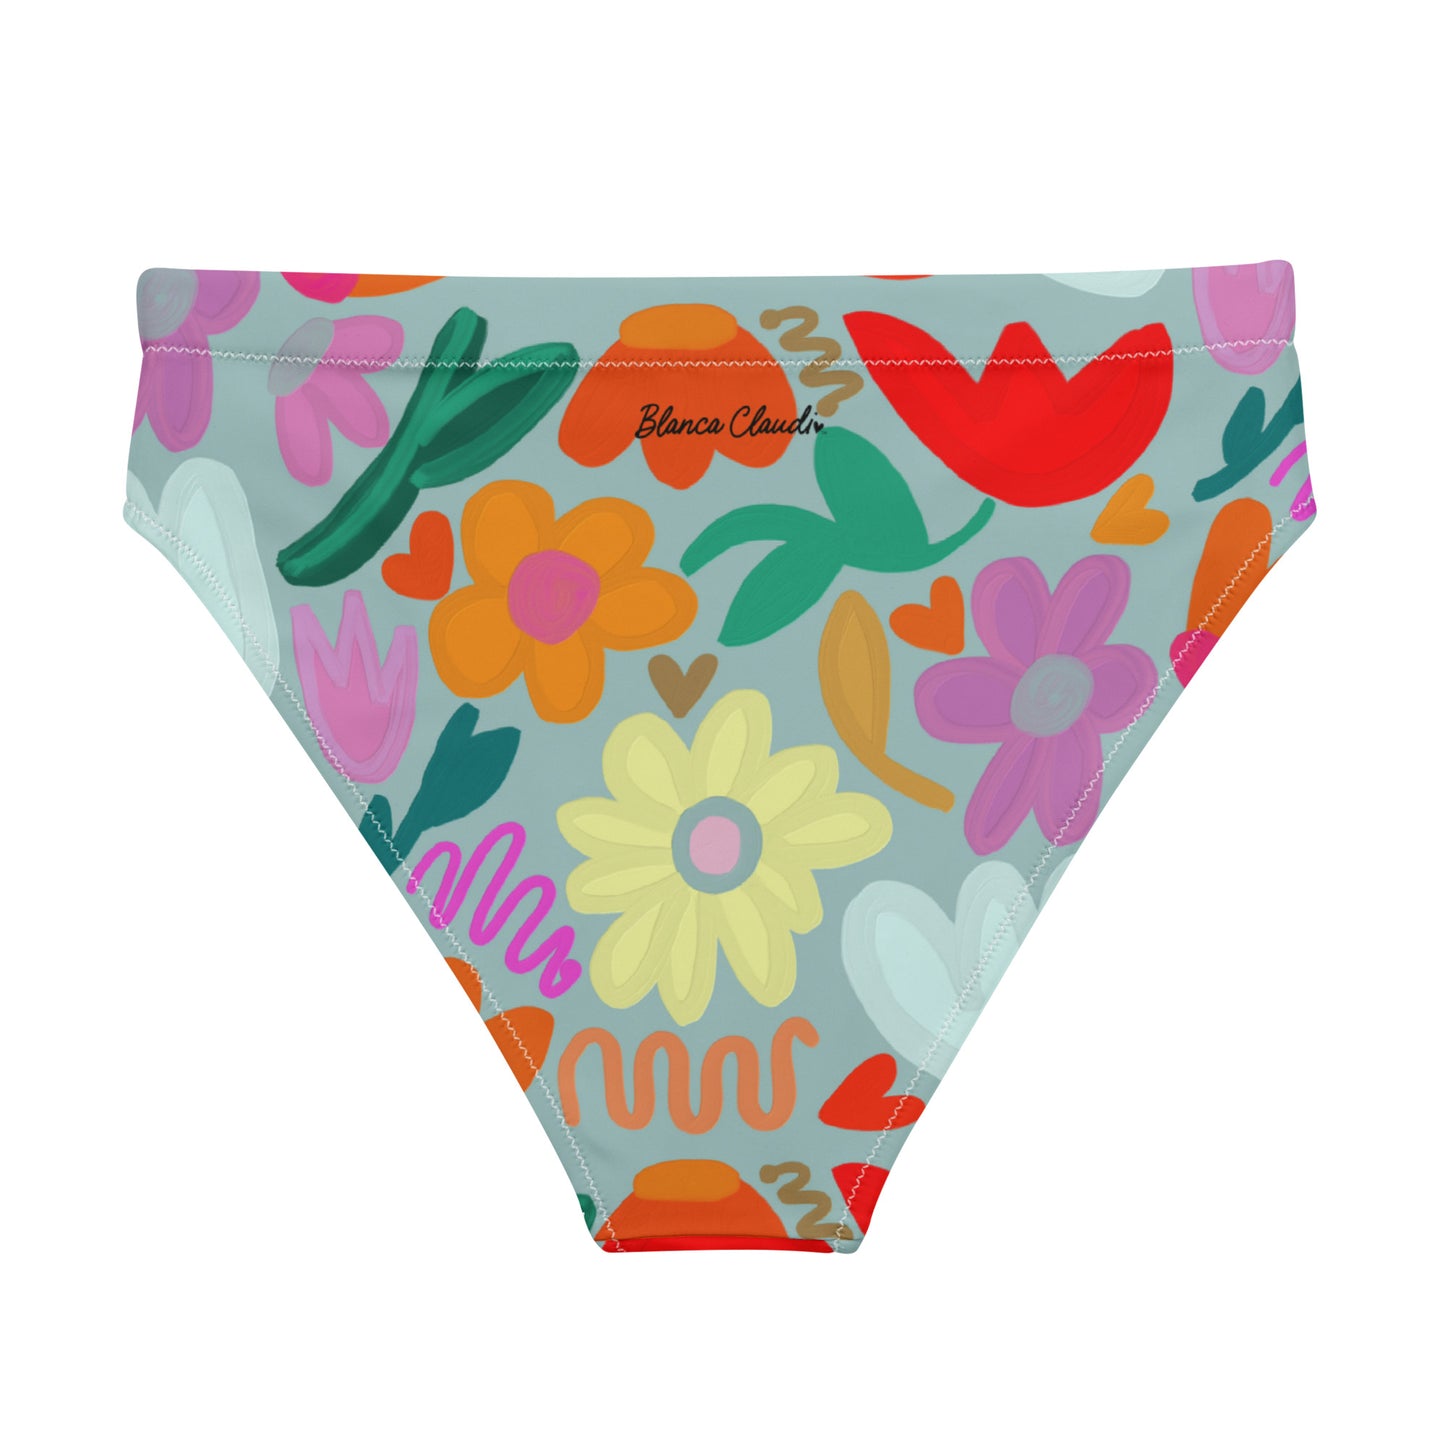 Spring 2 Recycled High-Waisted Bikini Bottom Plus